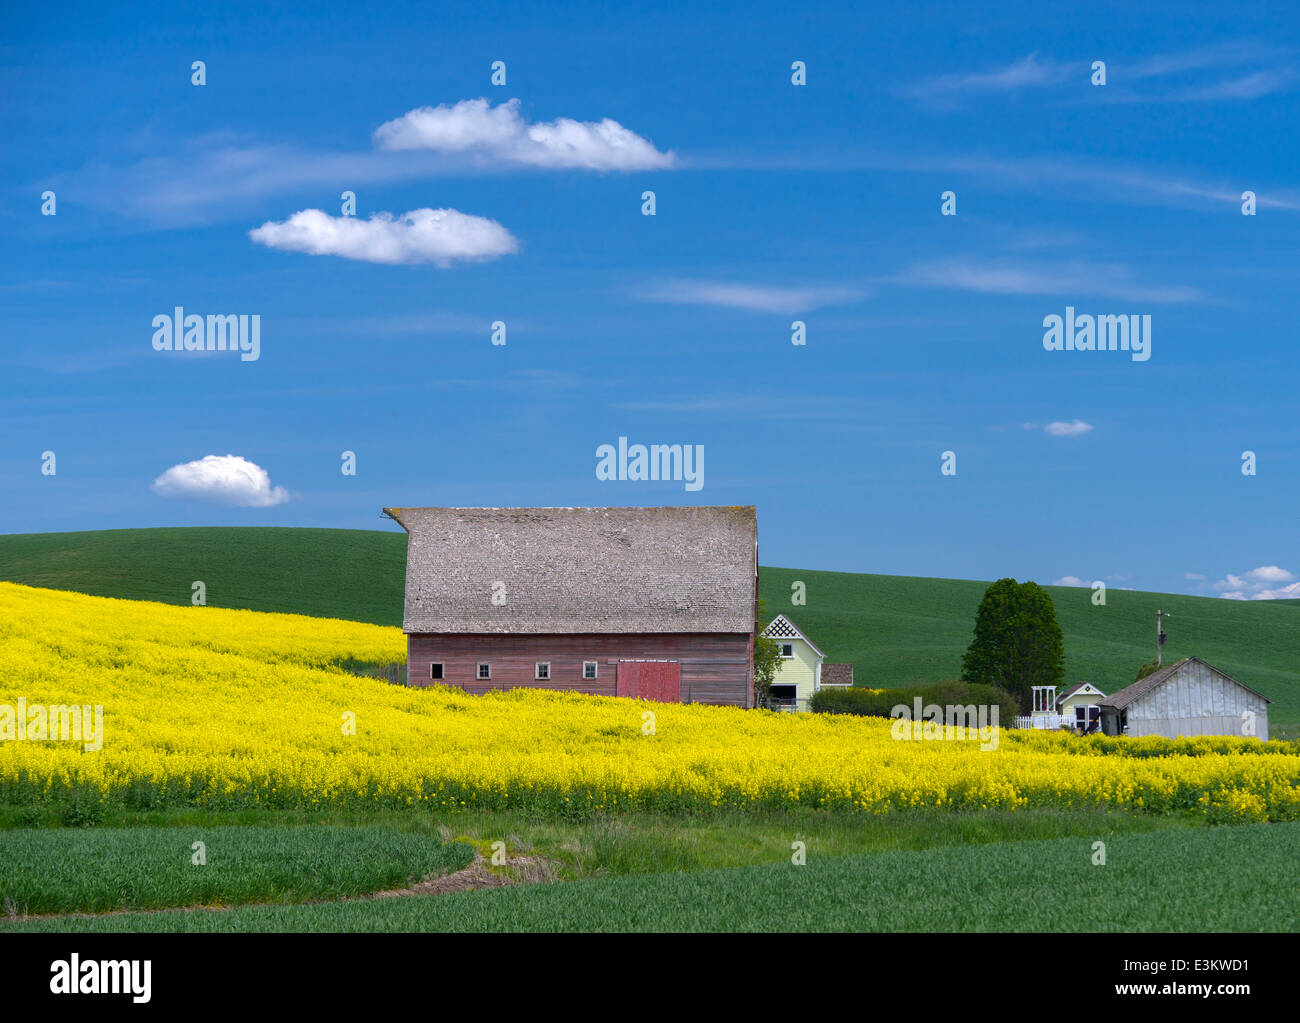 Palouse Land, Latah County, ID: Rote Scheune mit Hang des gelb blühenden Raps Feld Stockfoto